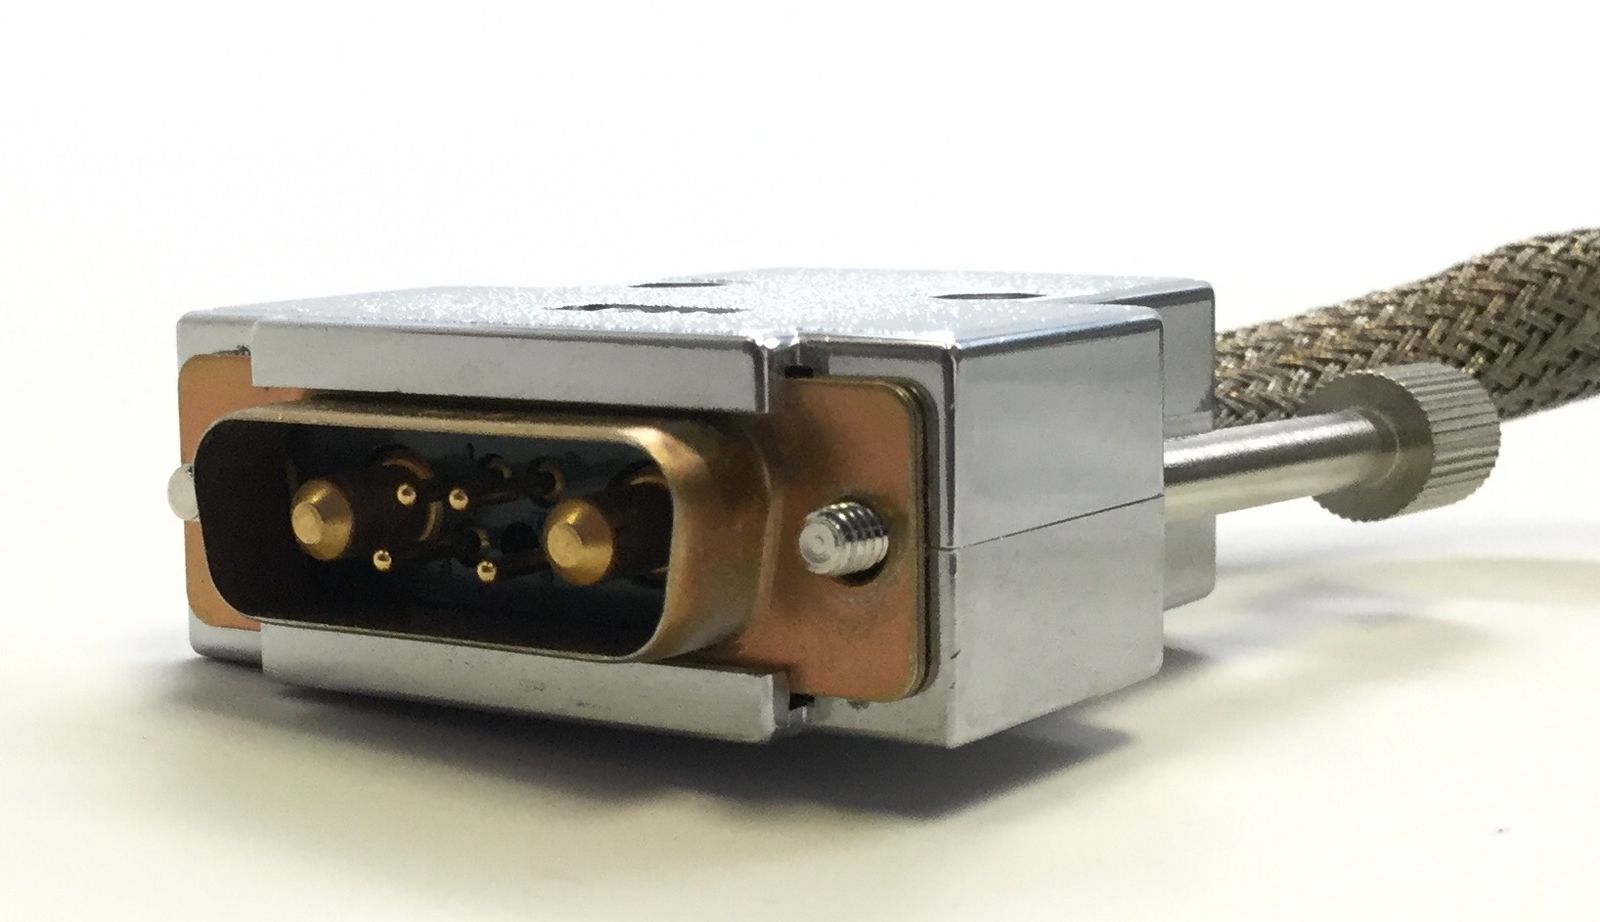 Siemens Sonoline Antares Ultrasound 7303659 PSP Power Supply DIAGNOSTIC ULTRASOUND MACHINES FOR SALE